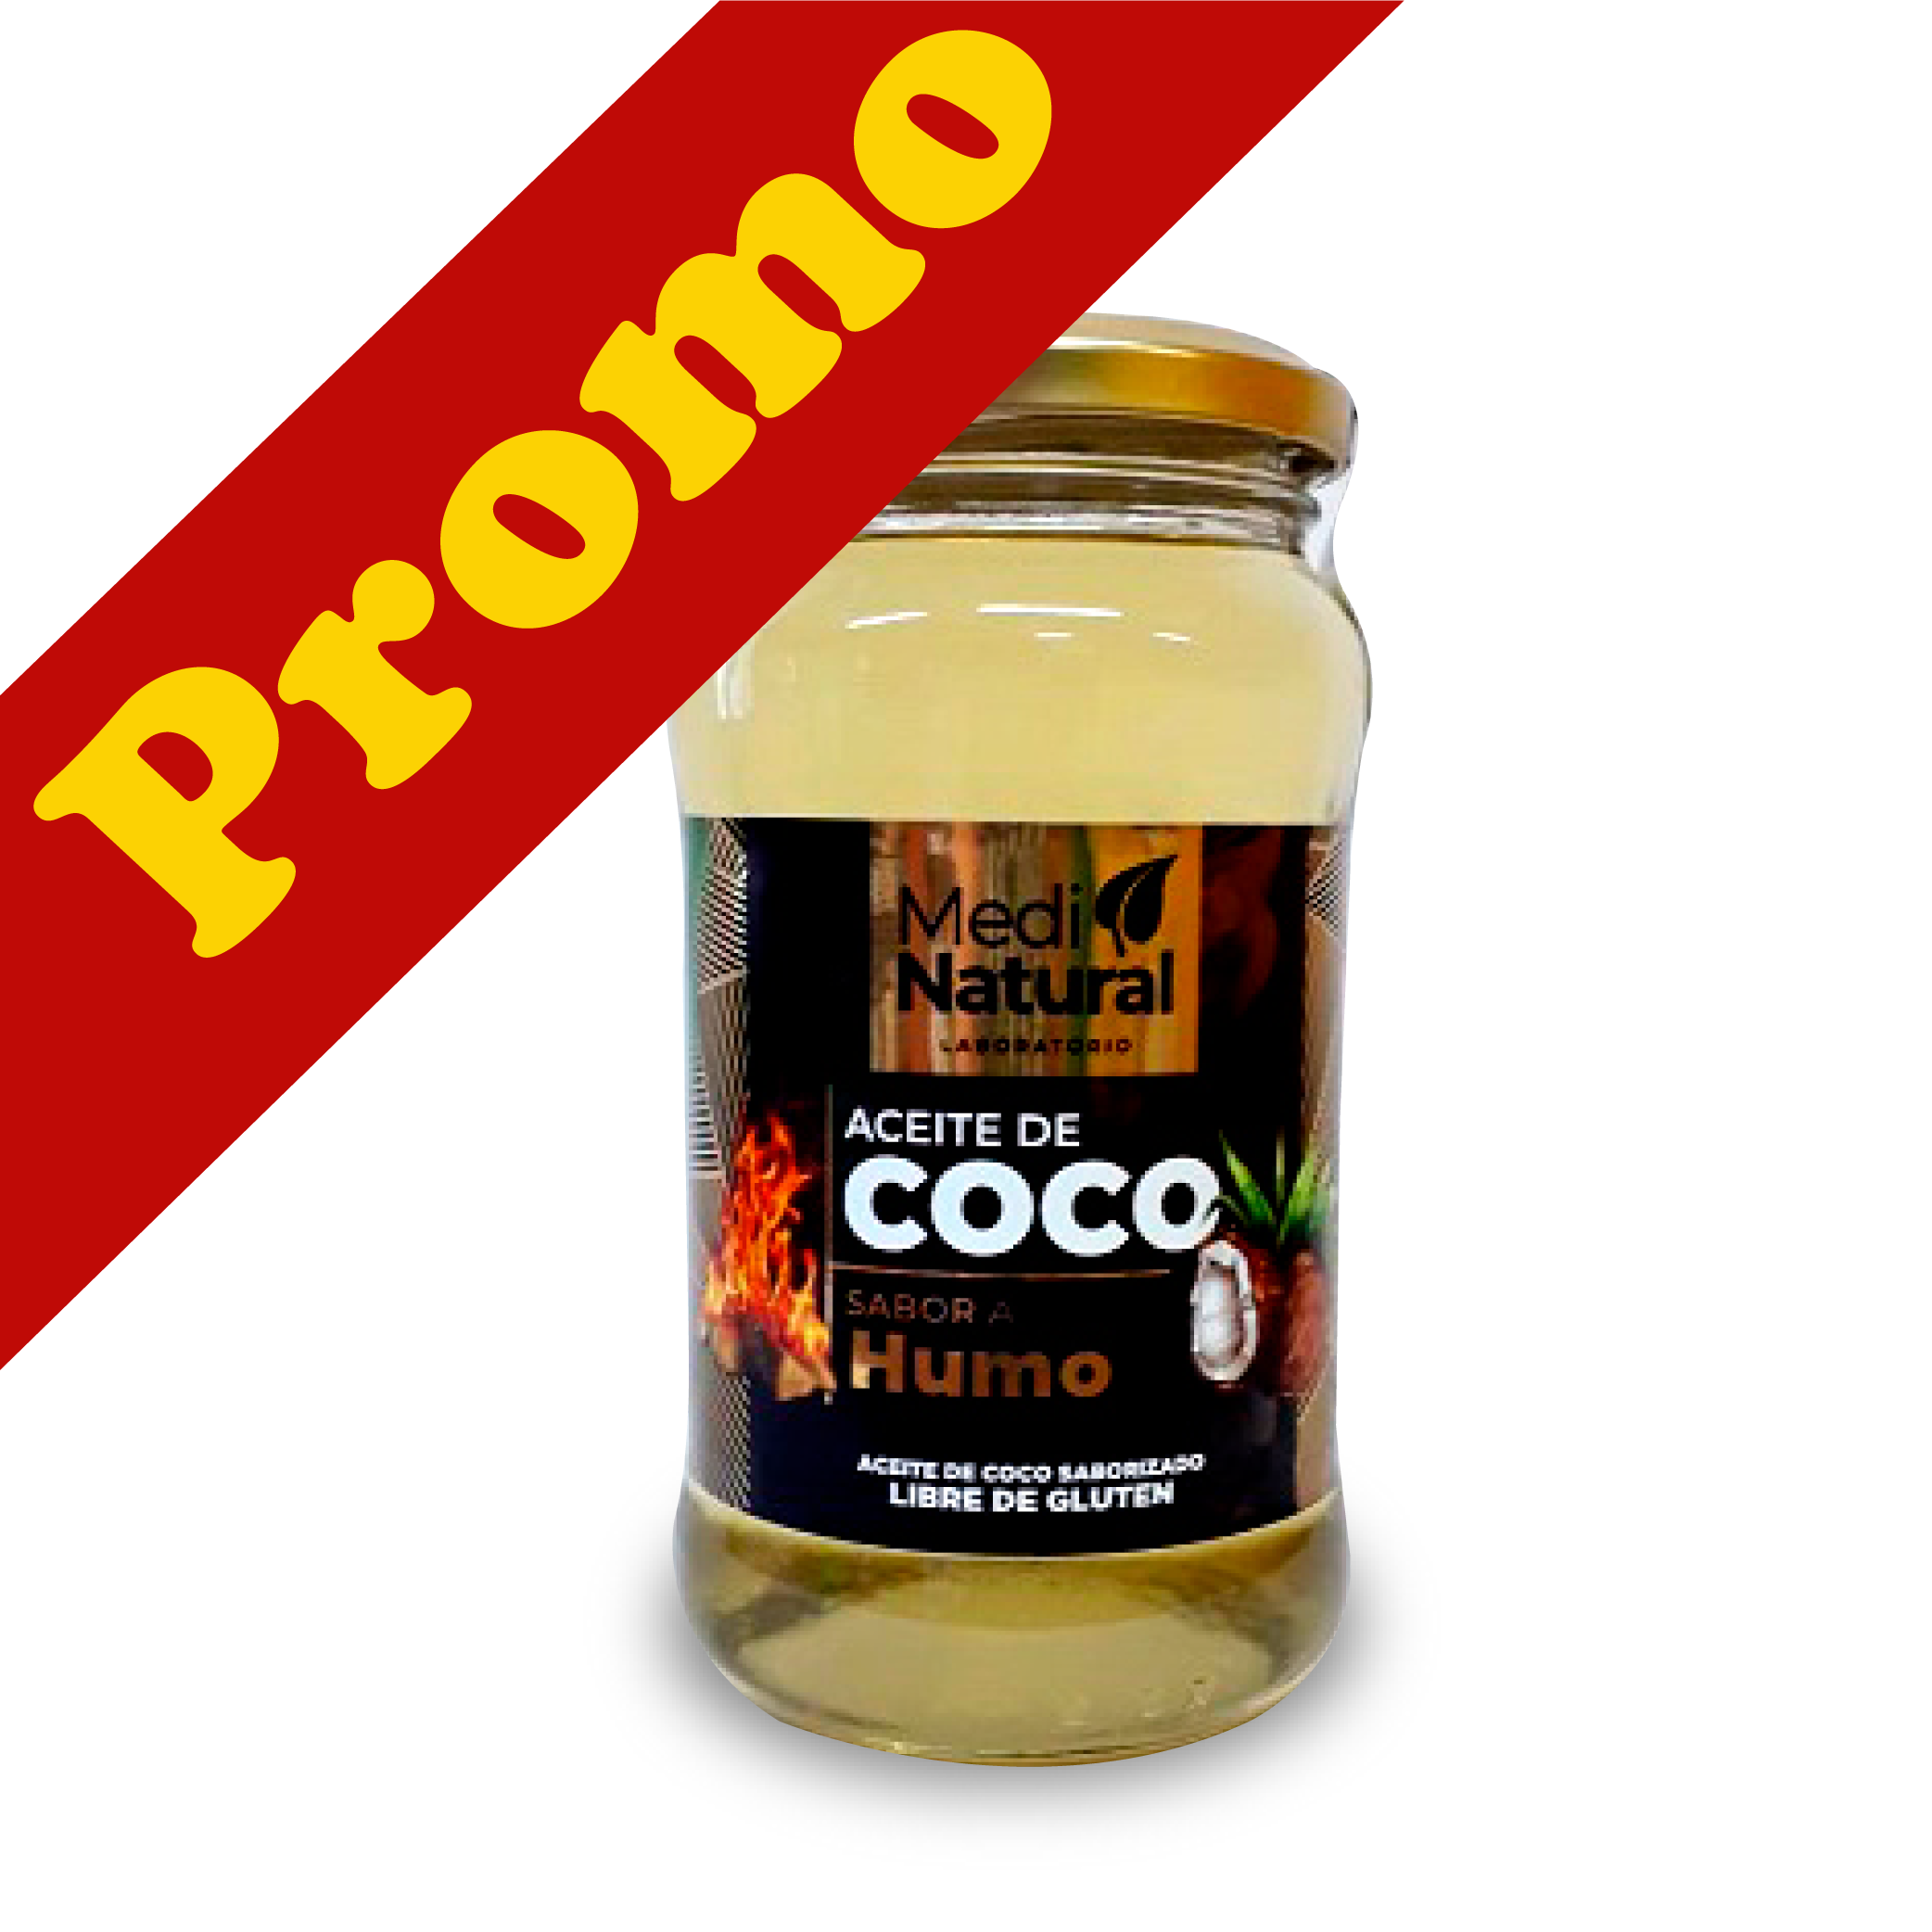 MediNatural- Aceite de coco neutro S/Humo PROMO 6 x 360 cc